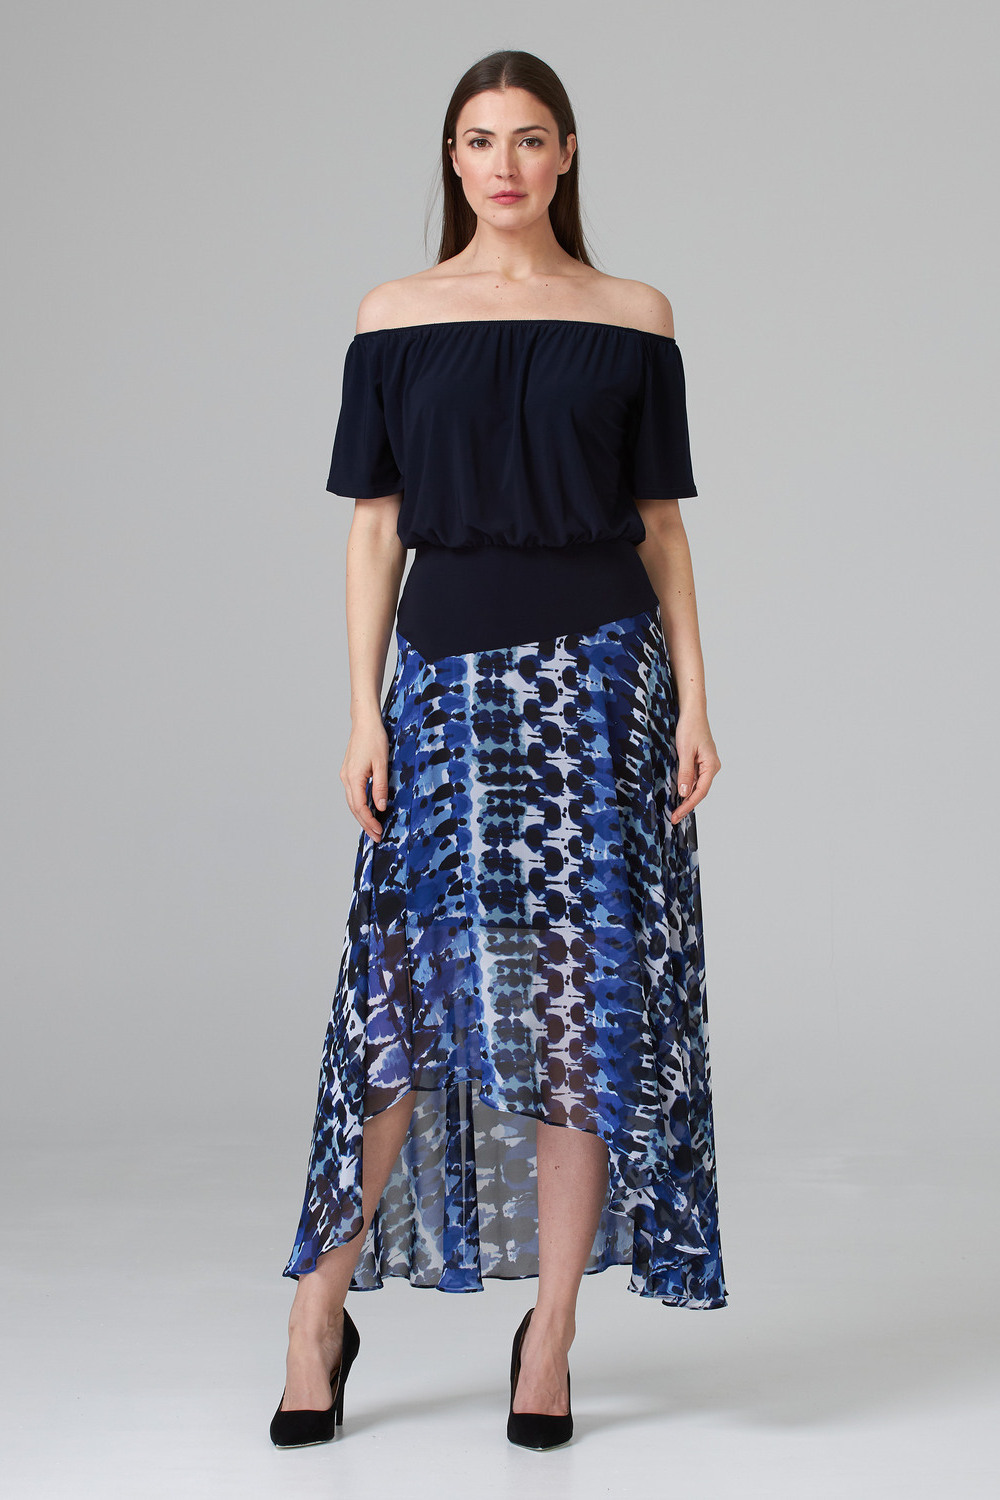 Joseph Ribkoff Dress Style 201443. Blue/black